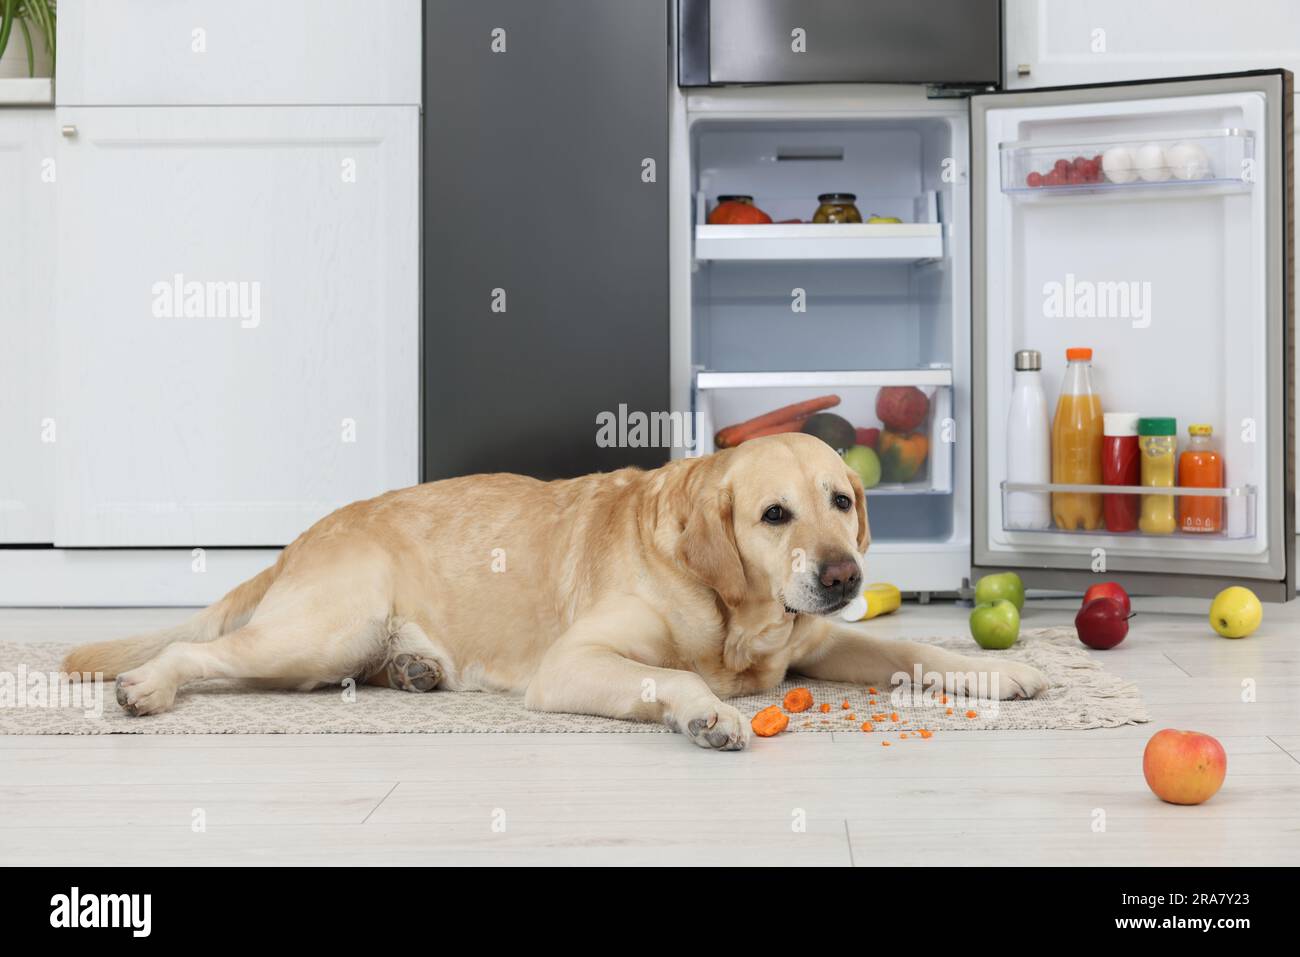 Cute Labrador Retriever eating carrot near refrigerator in kitchen Stock Photo